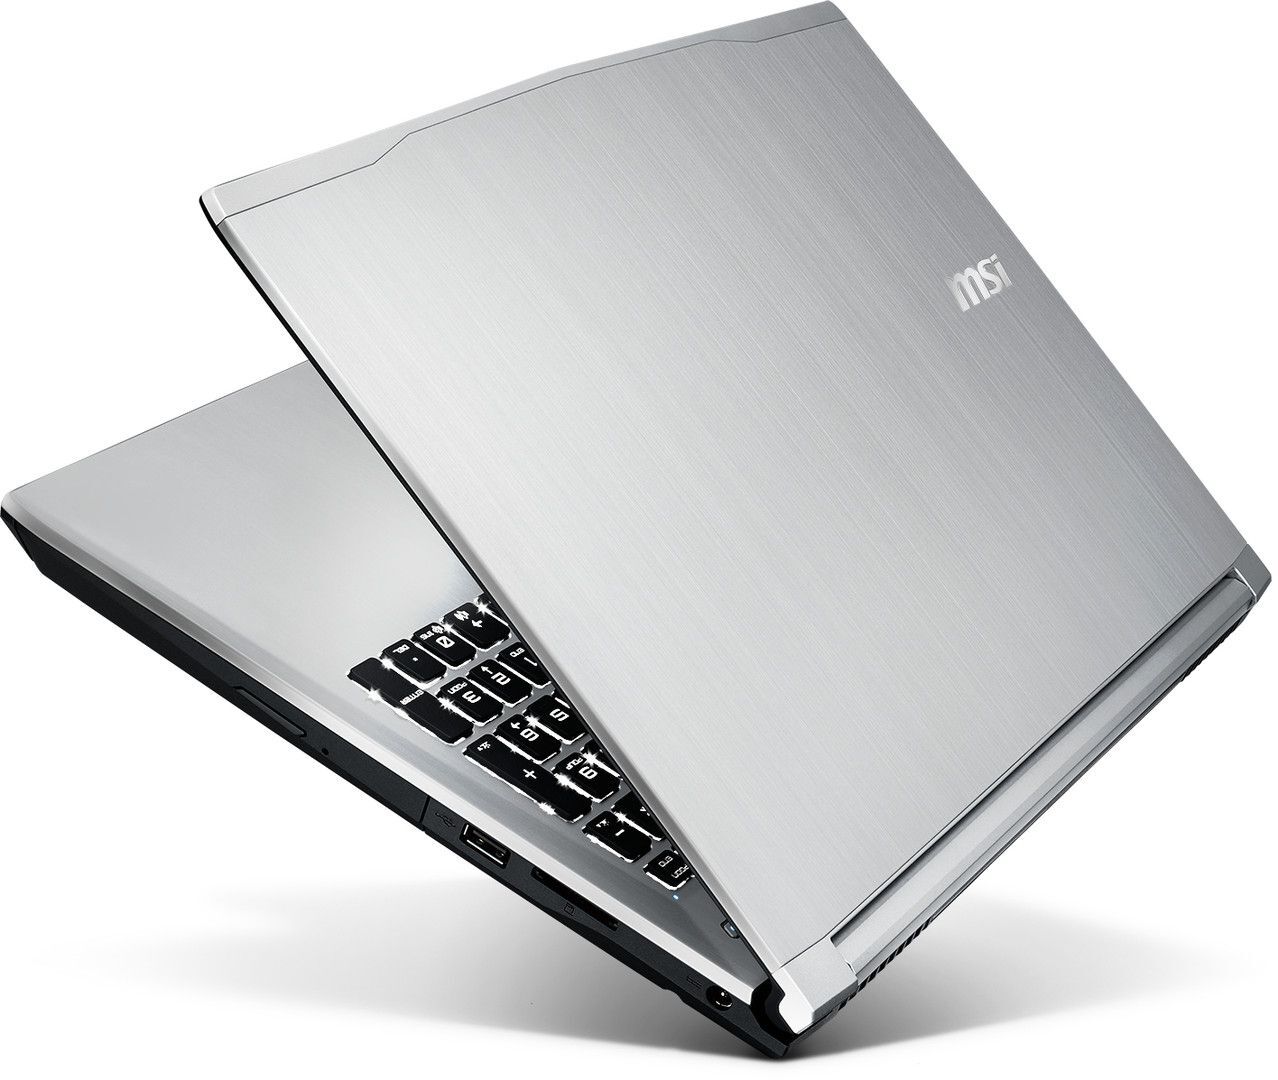 Laptop MSI PE70 6QE 627XVN - Intel Core i7-6700HQ 2.60GHz, Ram 8G DDR4, HDD 1TB 7200rpm, VGA GeForce GTX 960M